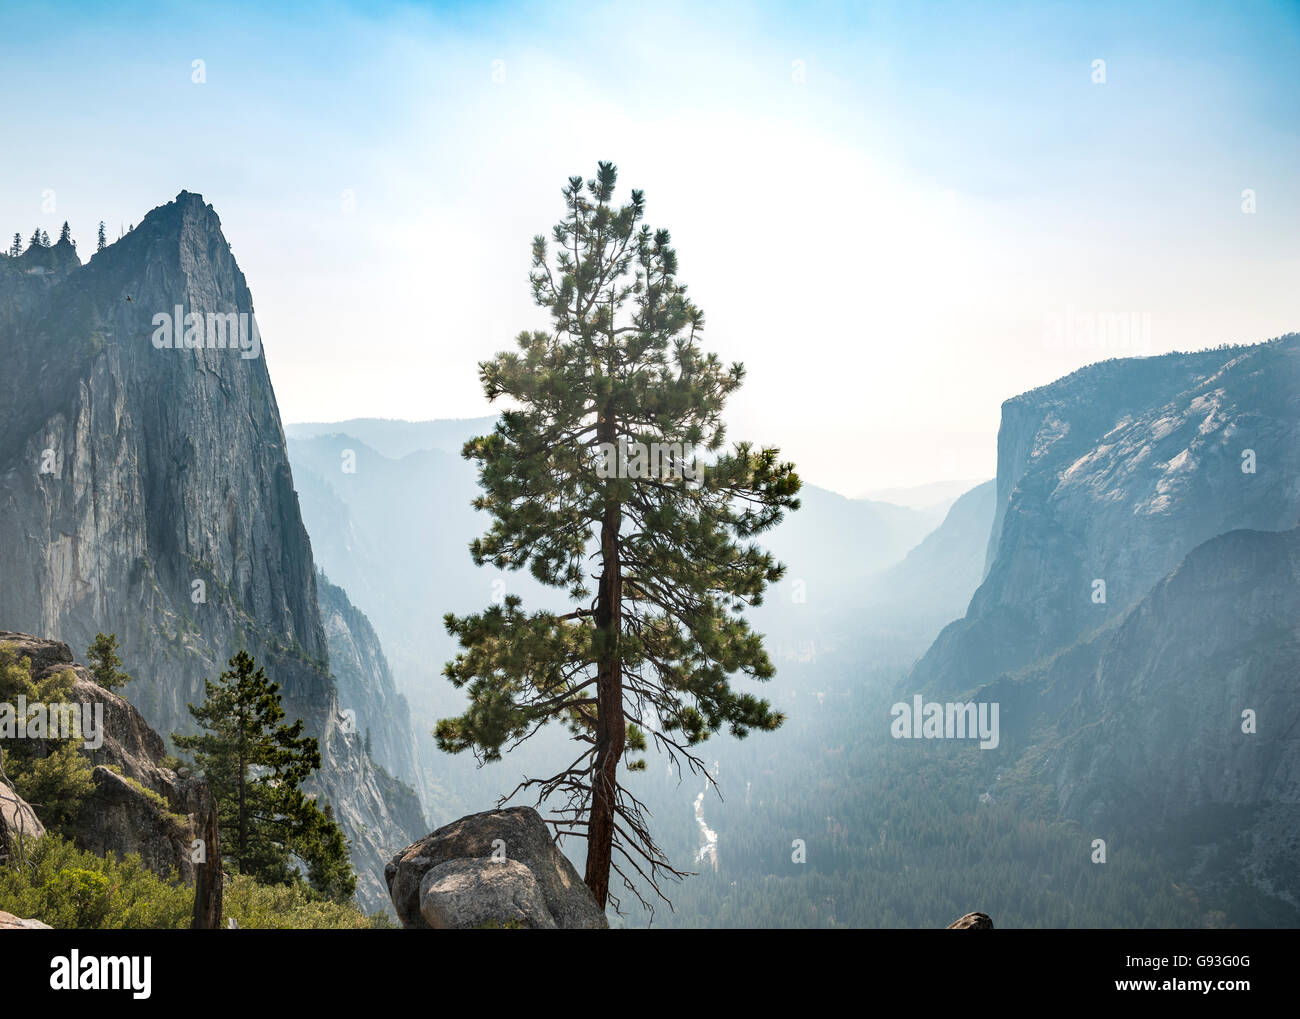 Tree, view of Yosemite Valley, Taft Point, El Capitan, Yosemite National Park, California, USA Stock Photo